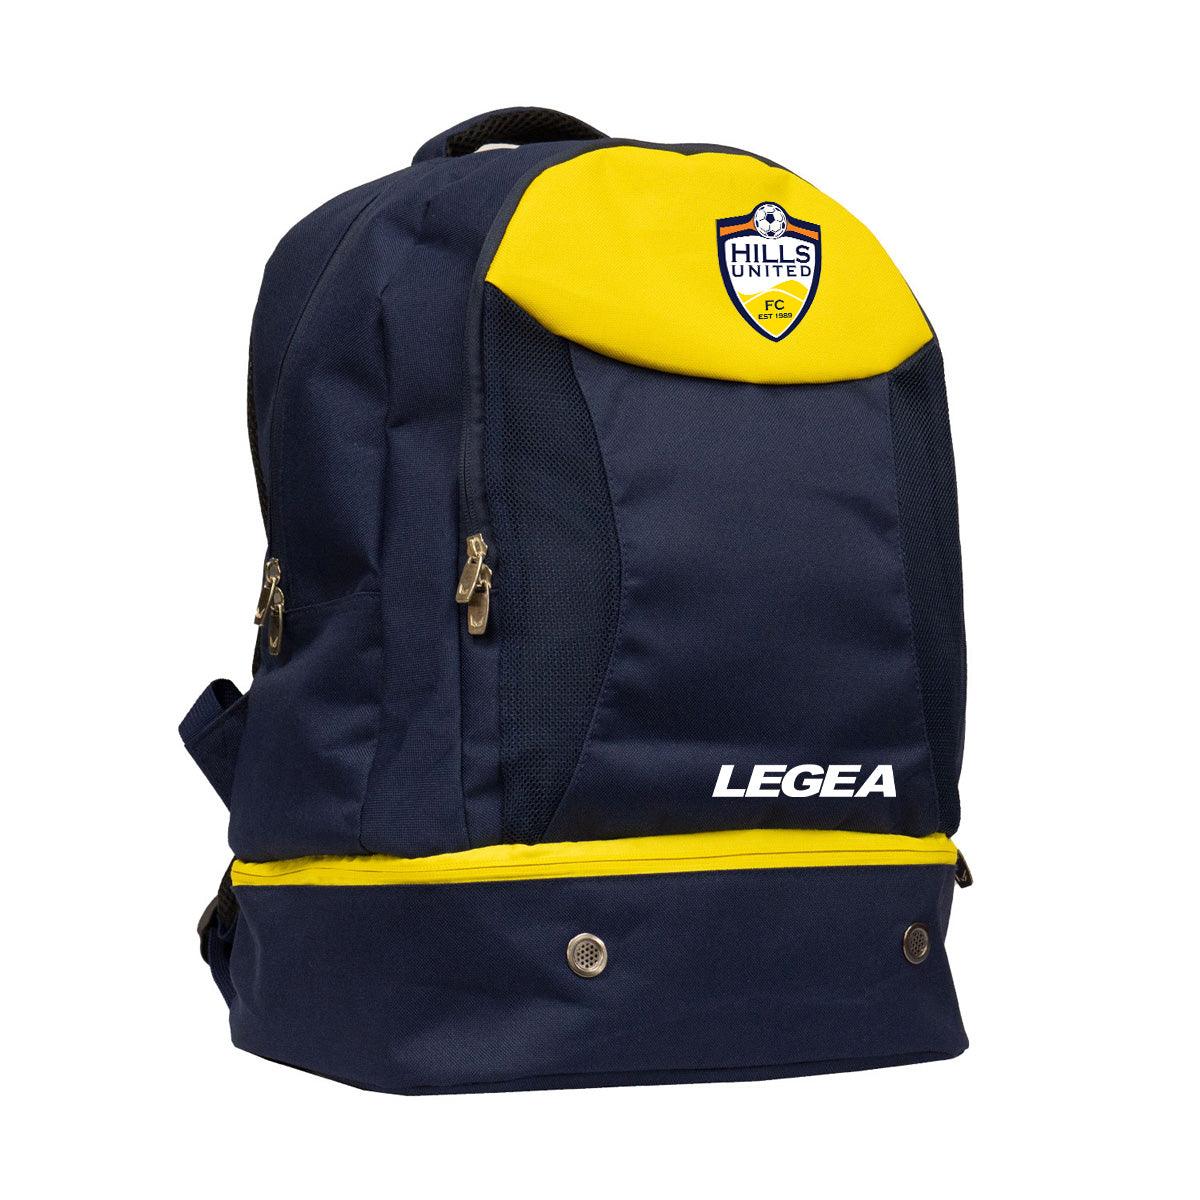 Hills United Spalla Backpack Navy / Yellow - Legea Australia